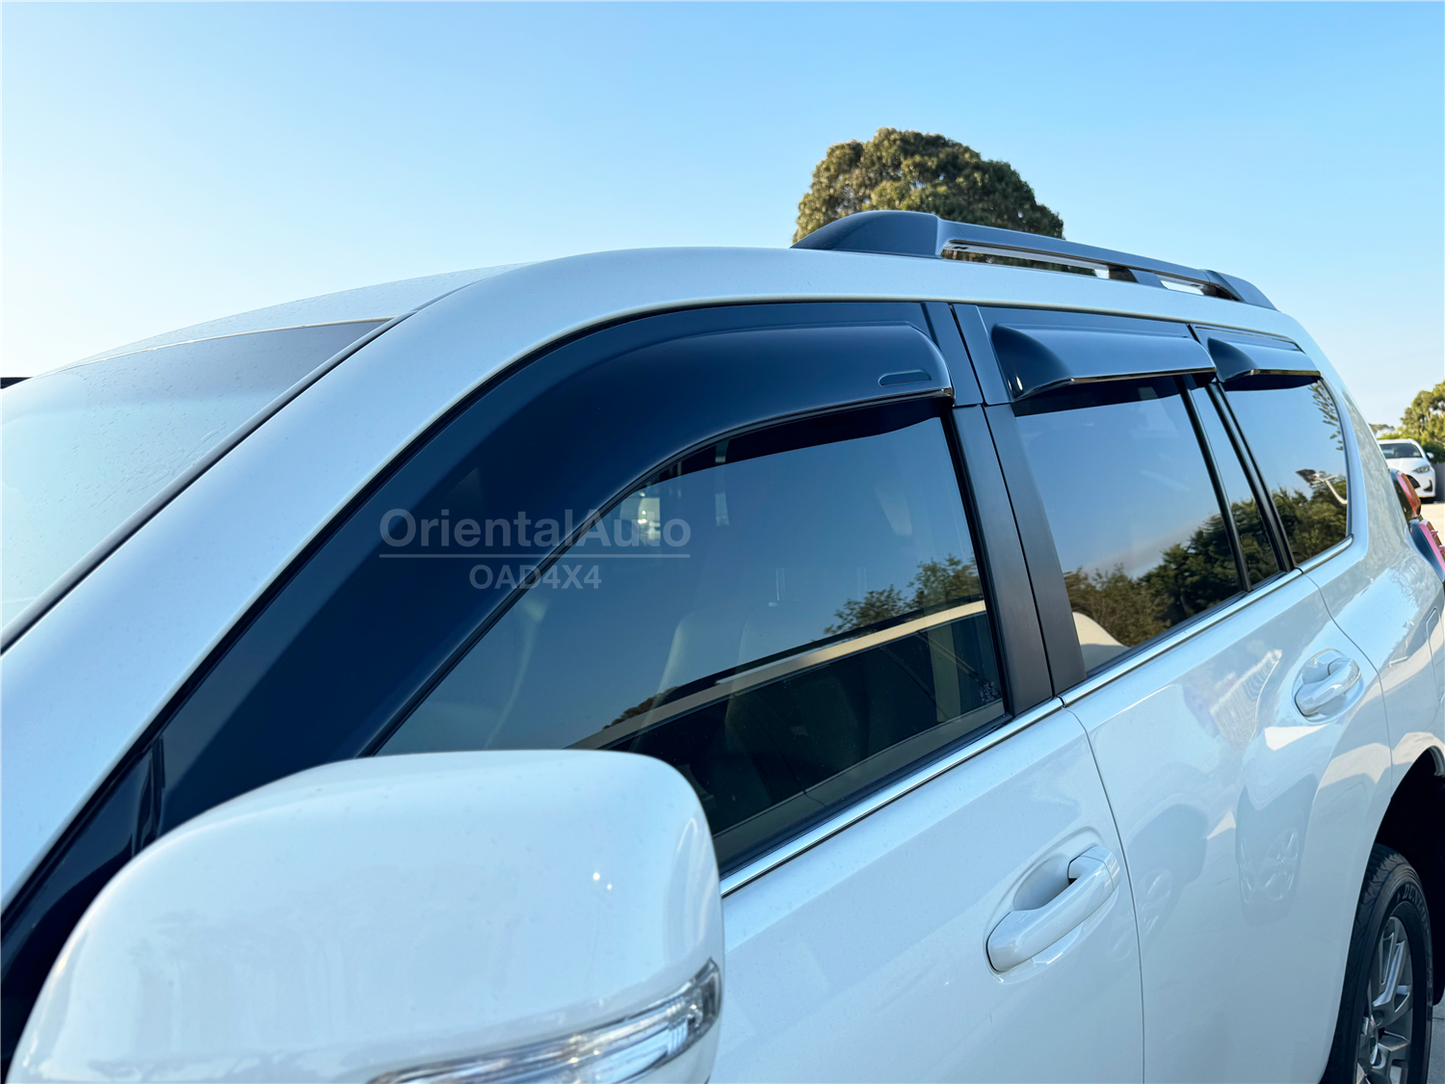 Injection Bonnet Protector & Widened Luxury 6pcs Weathershield for Toyota Land Cruiser Prado 150 2018-Onwards Weather Shields Window Visor + Hood Protector Bonnet Guard